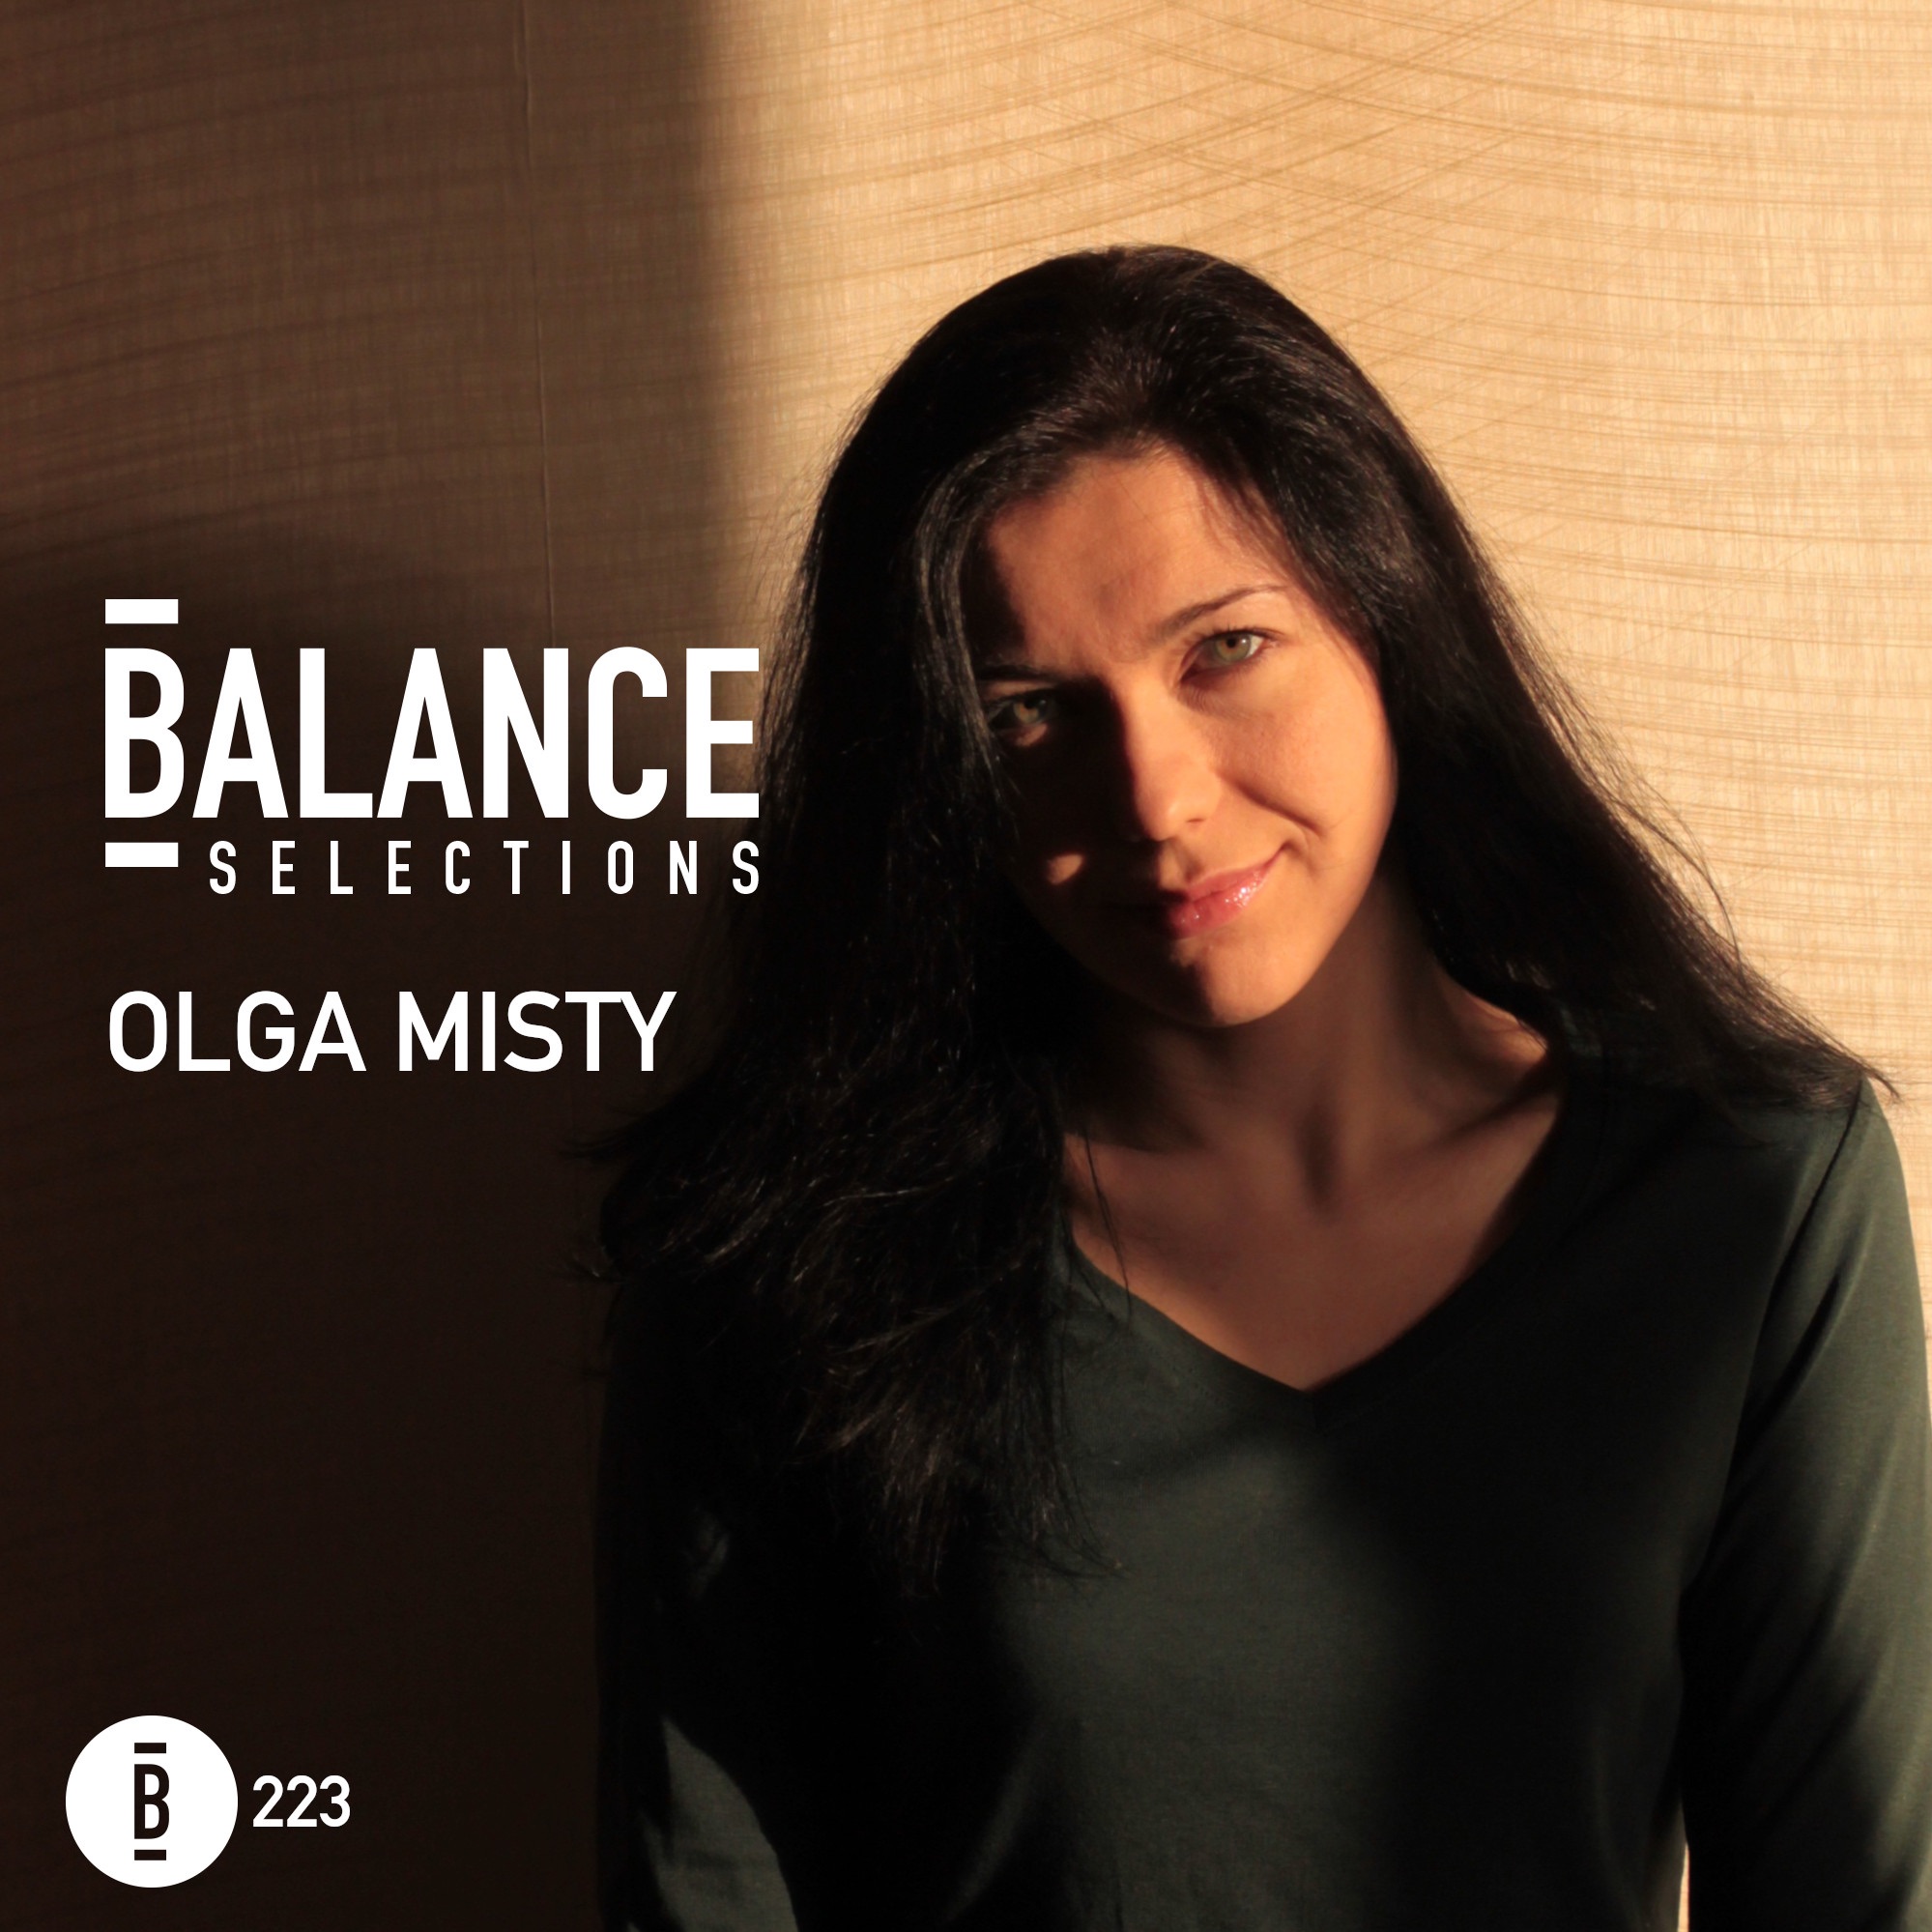 Lae alla Balance Selections 223: Olga Misty